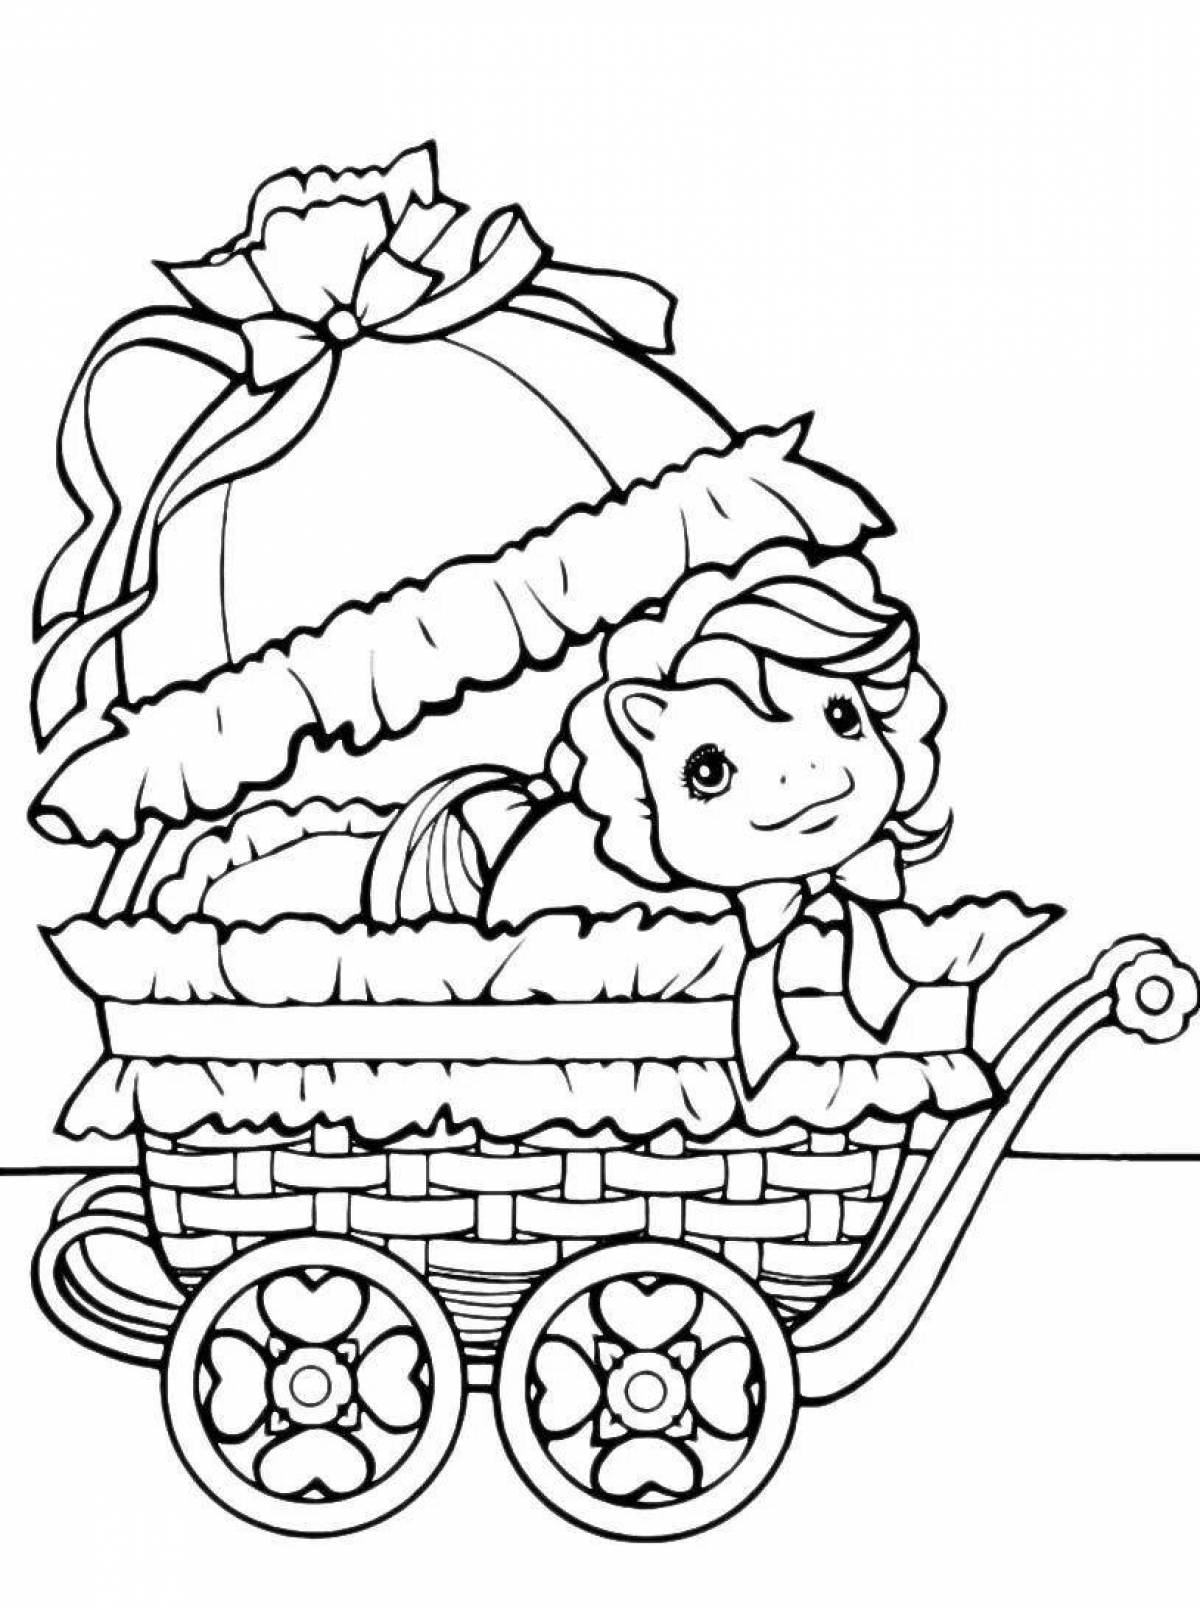 Serene coloring page малыш в коляске